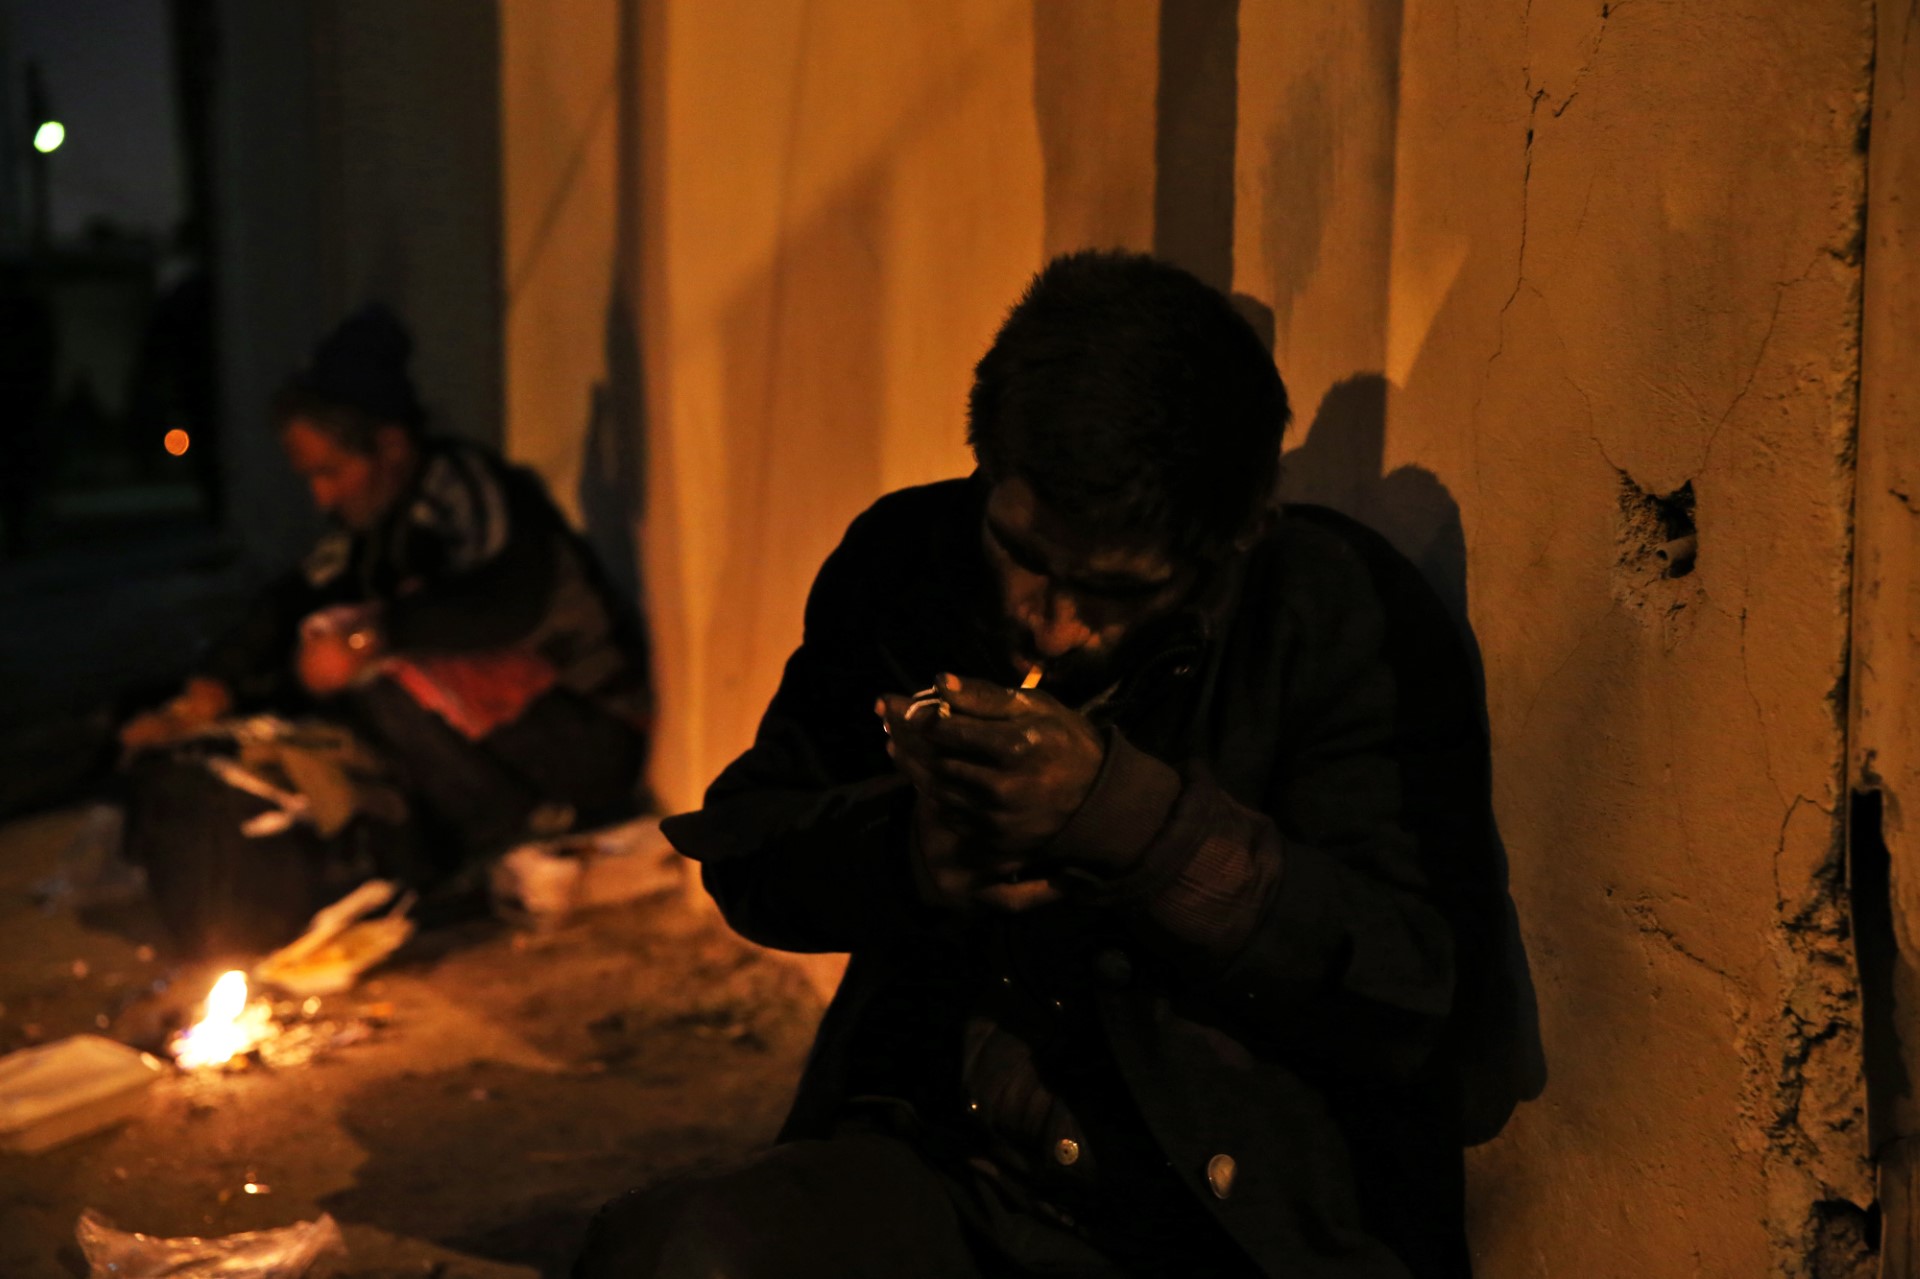 A drug addict takes crystal meth in Tehran (image: AP Photo/Ebrahim Noroozi)